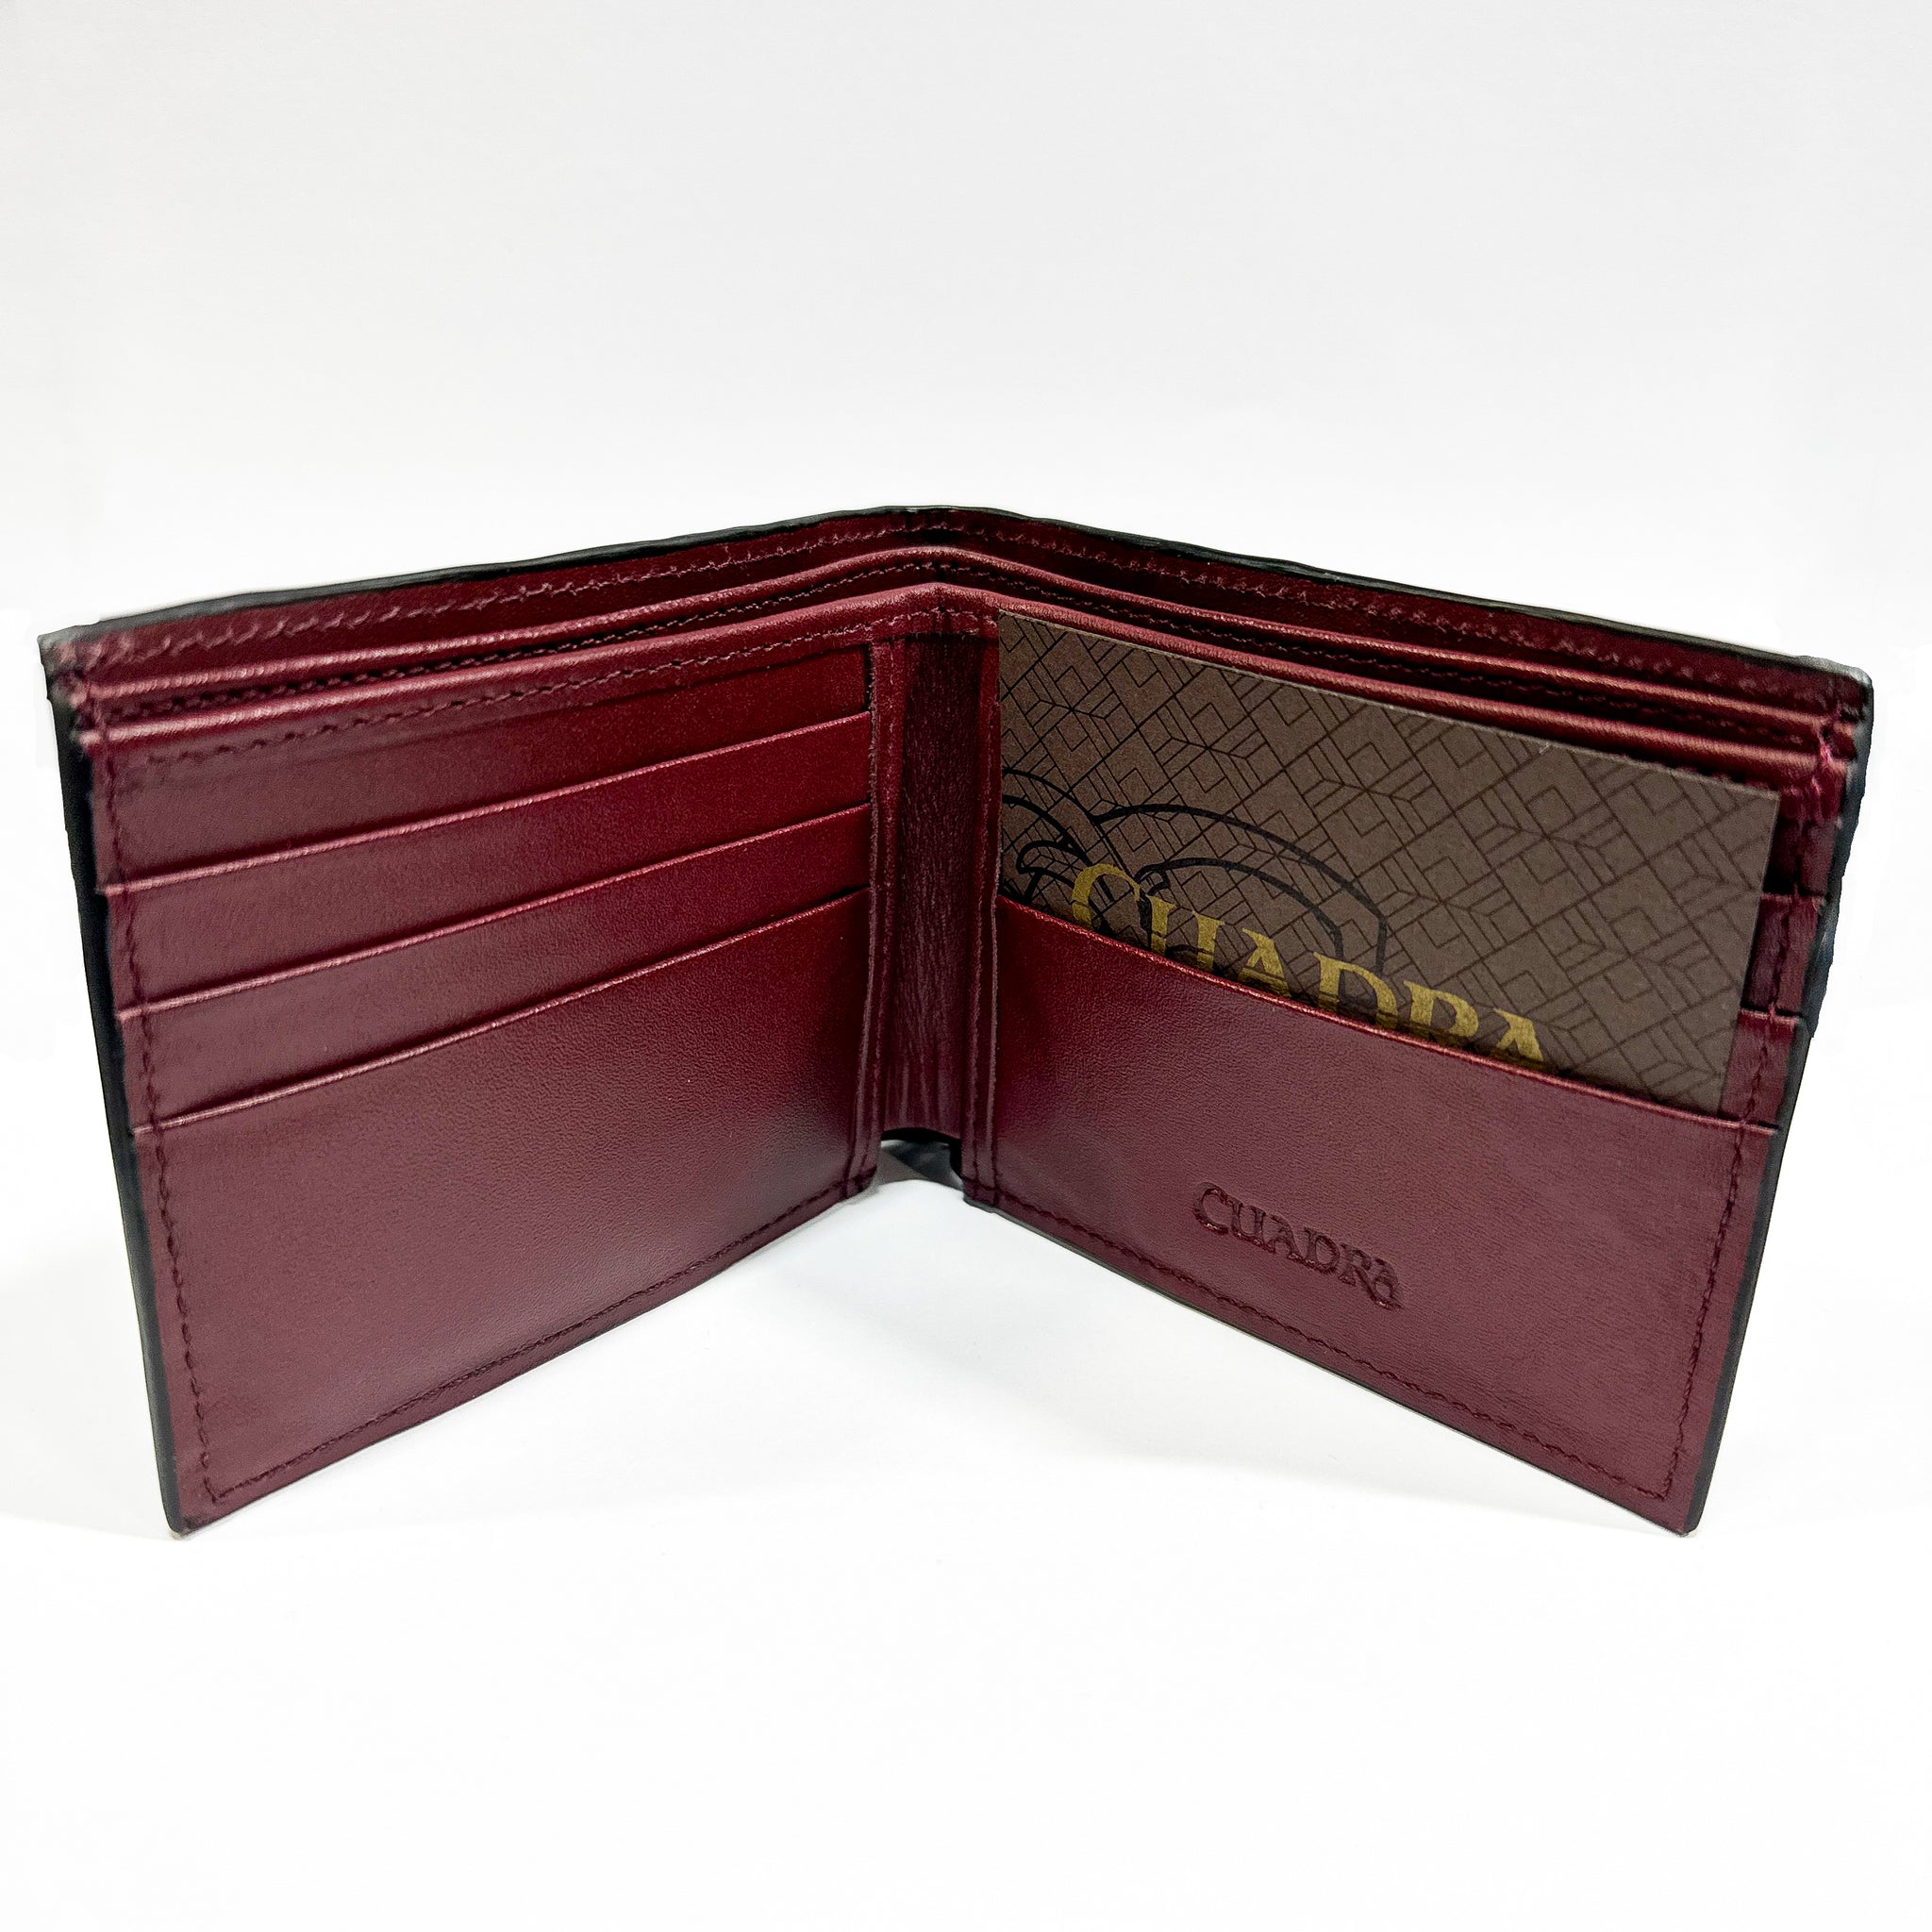 Handmade bifold black leather wallet for men - B3038RS - Cuadra Shop